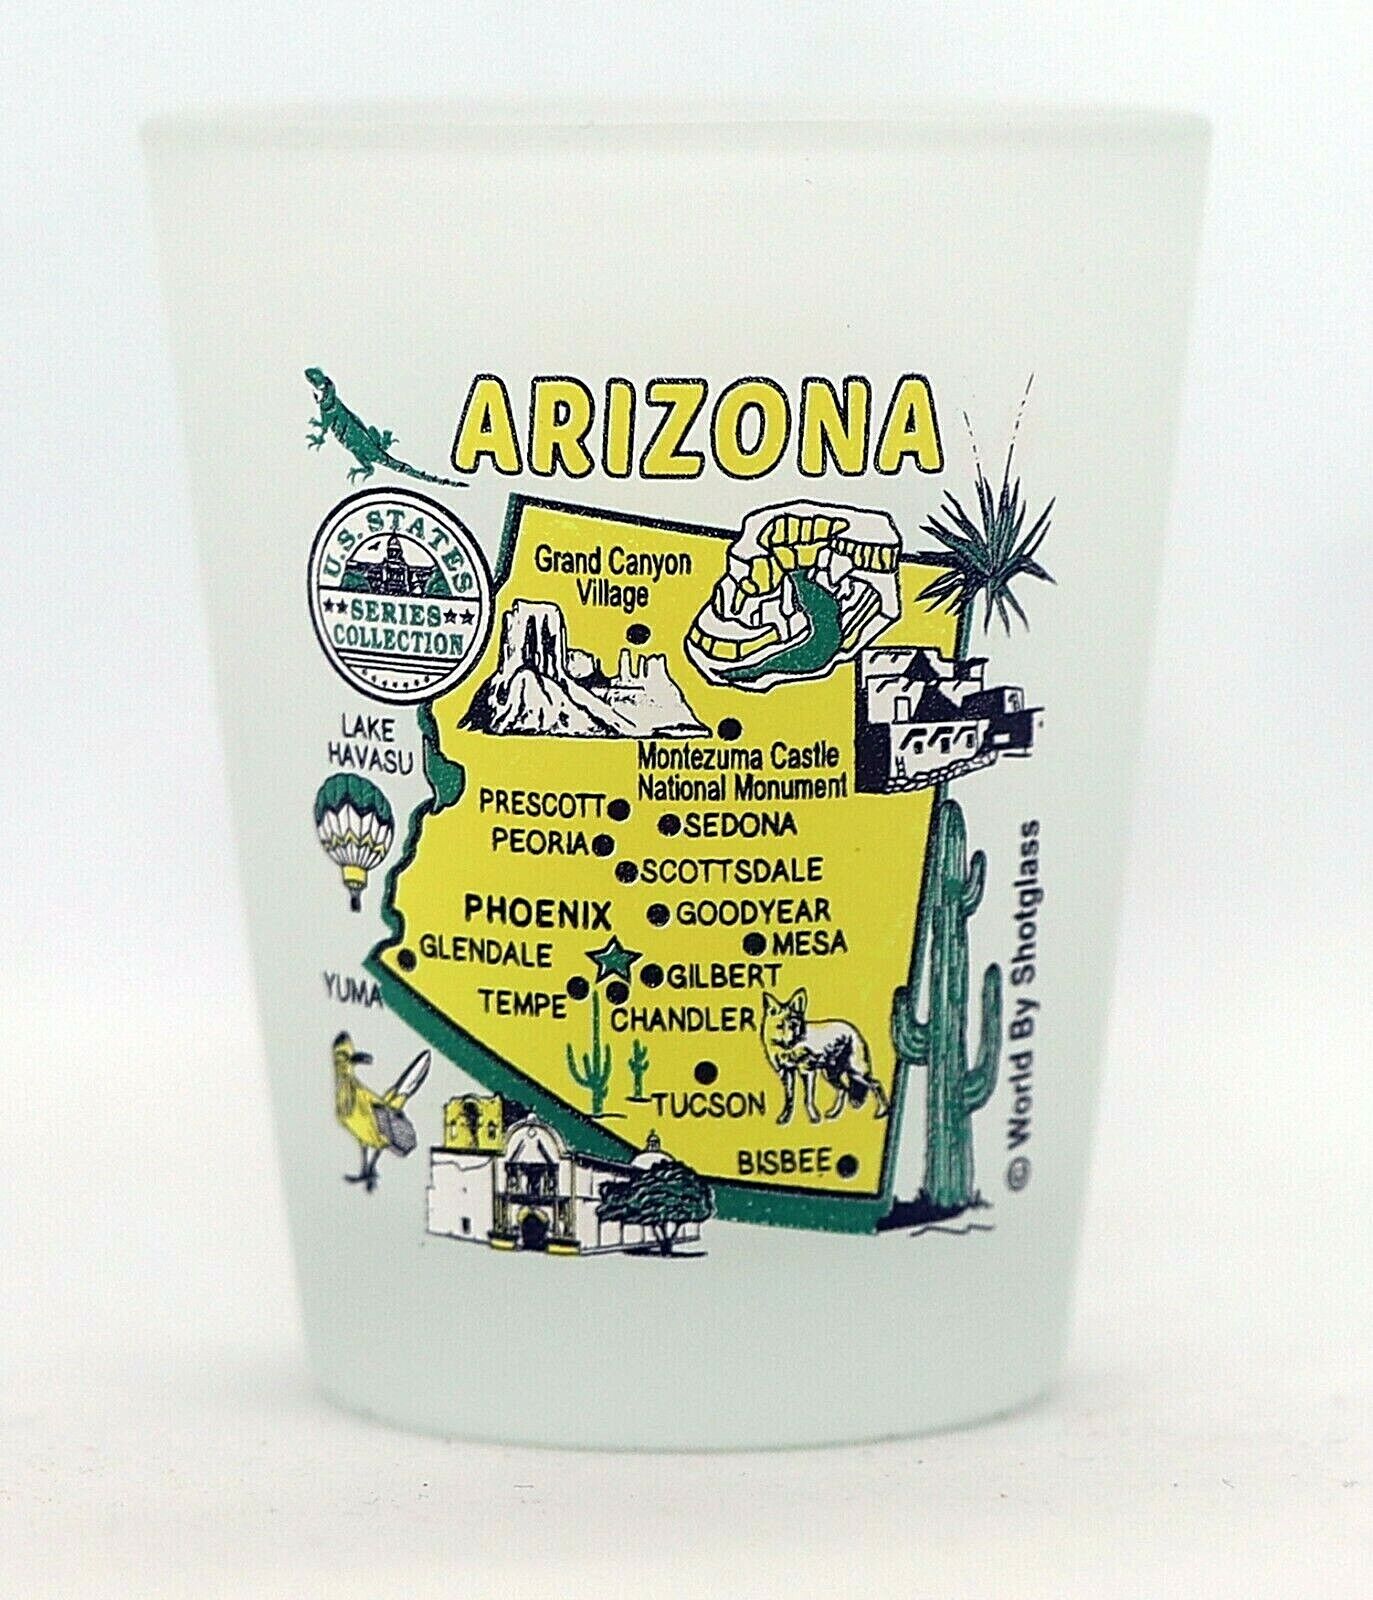 Arizona US States Series Collection Shot Glass